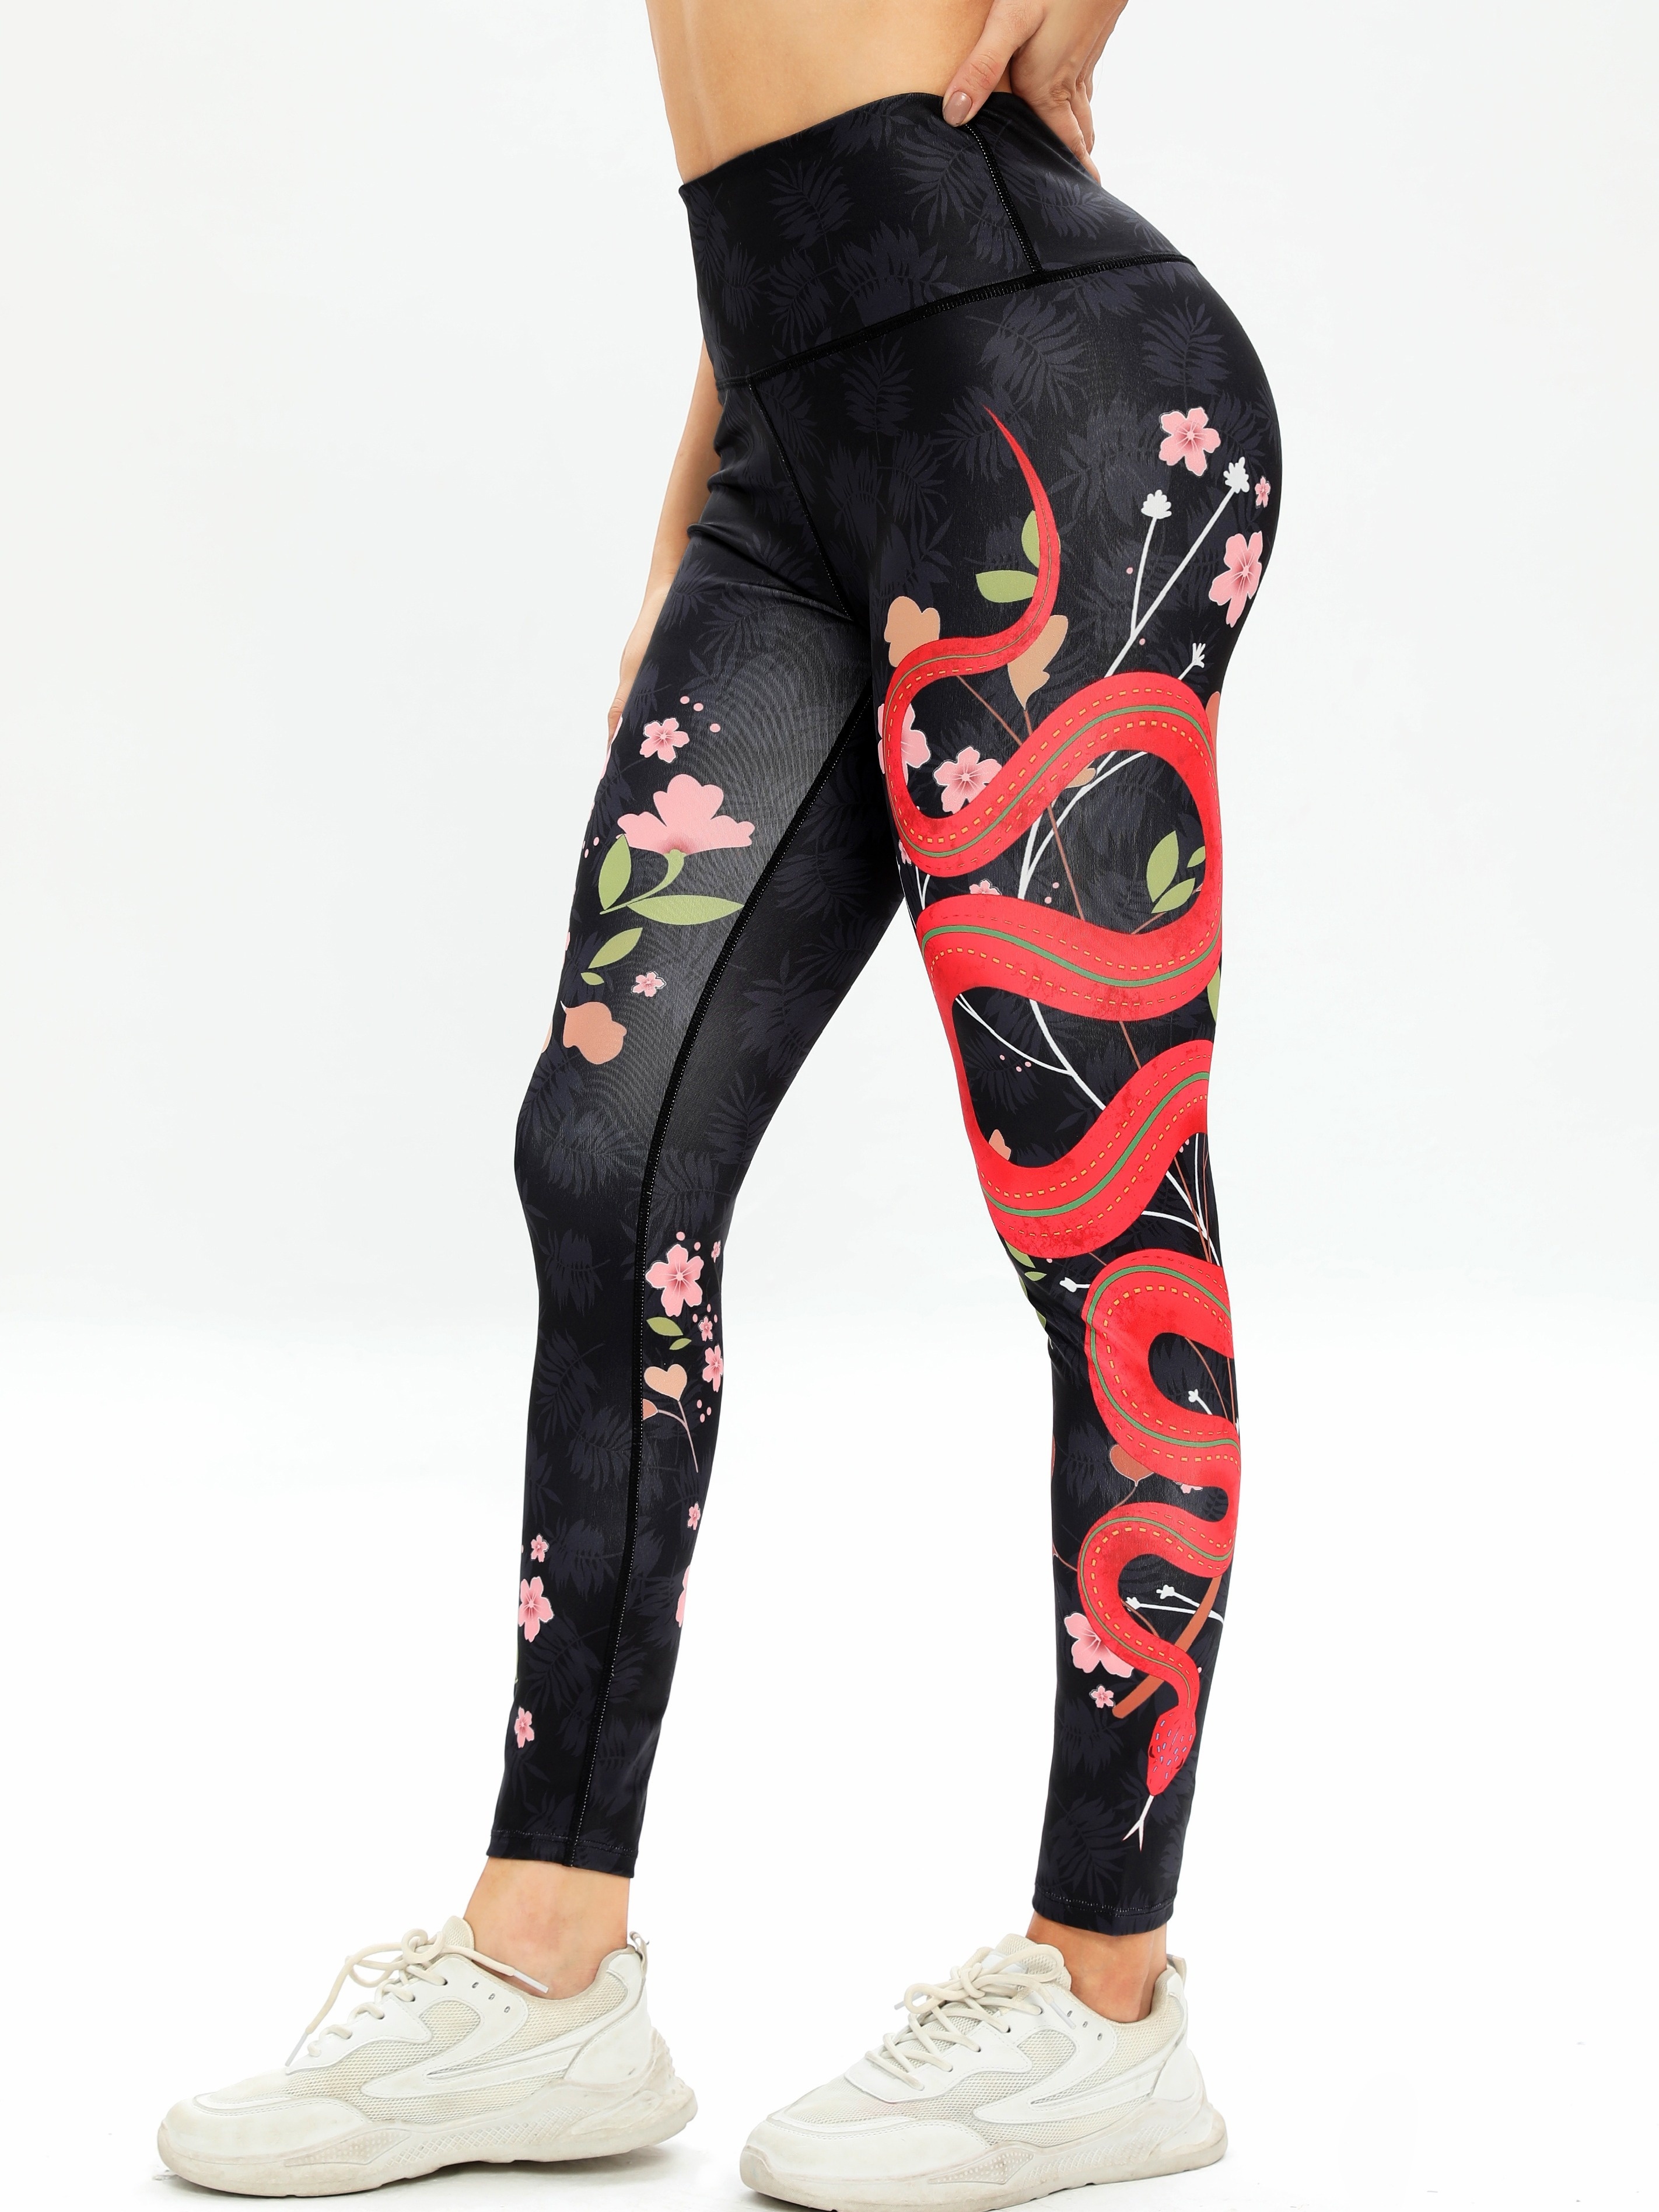 Python Snake Print Women's Yoga Pants High Waist Leggings with Pockets Gym  Workout Tights